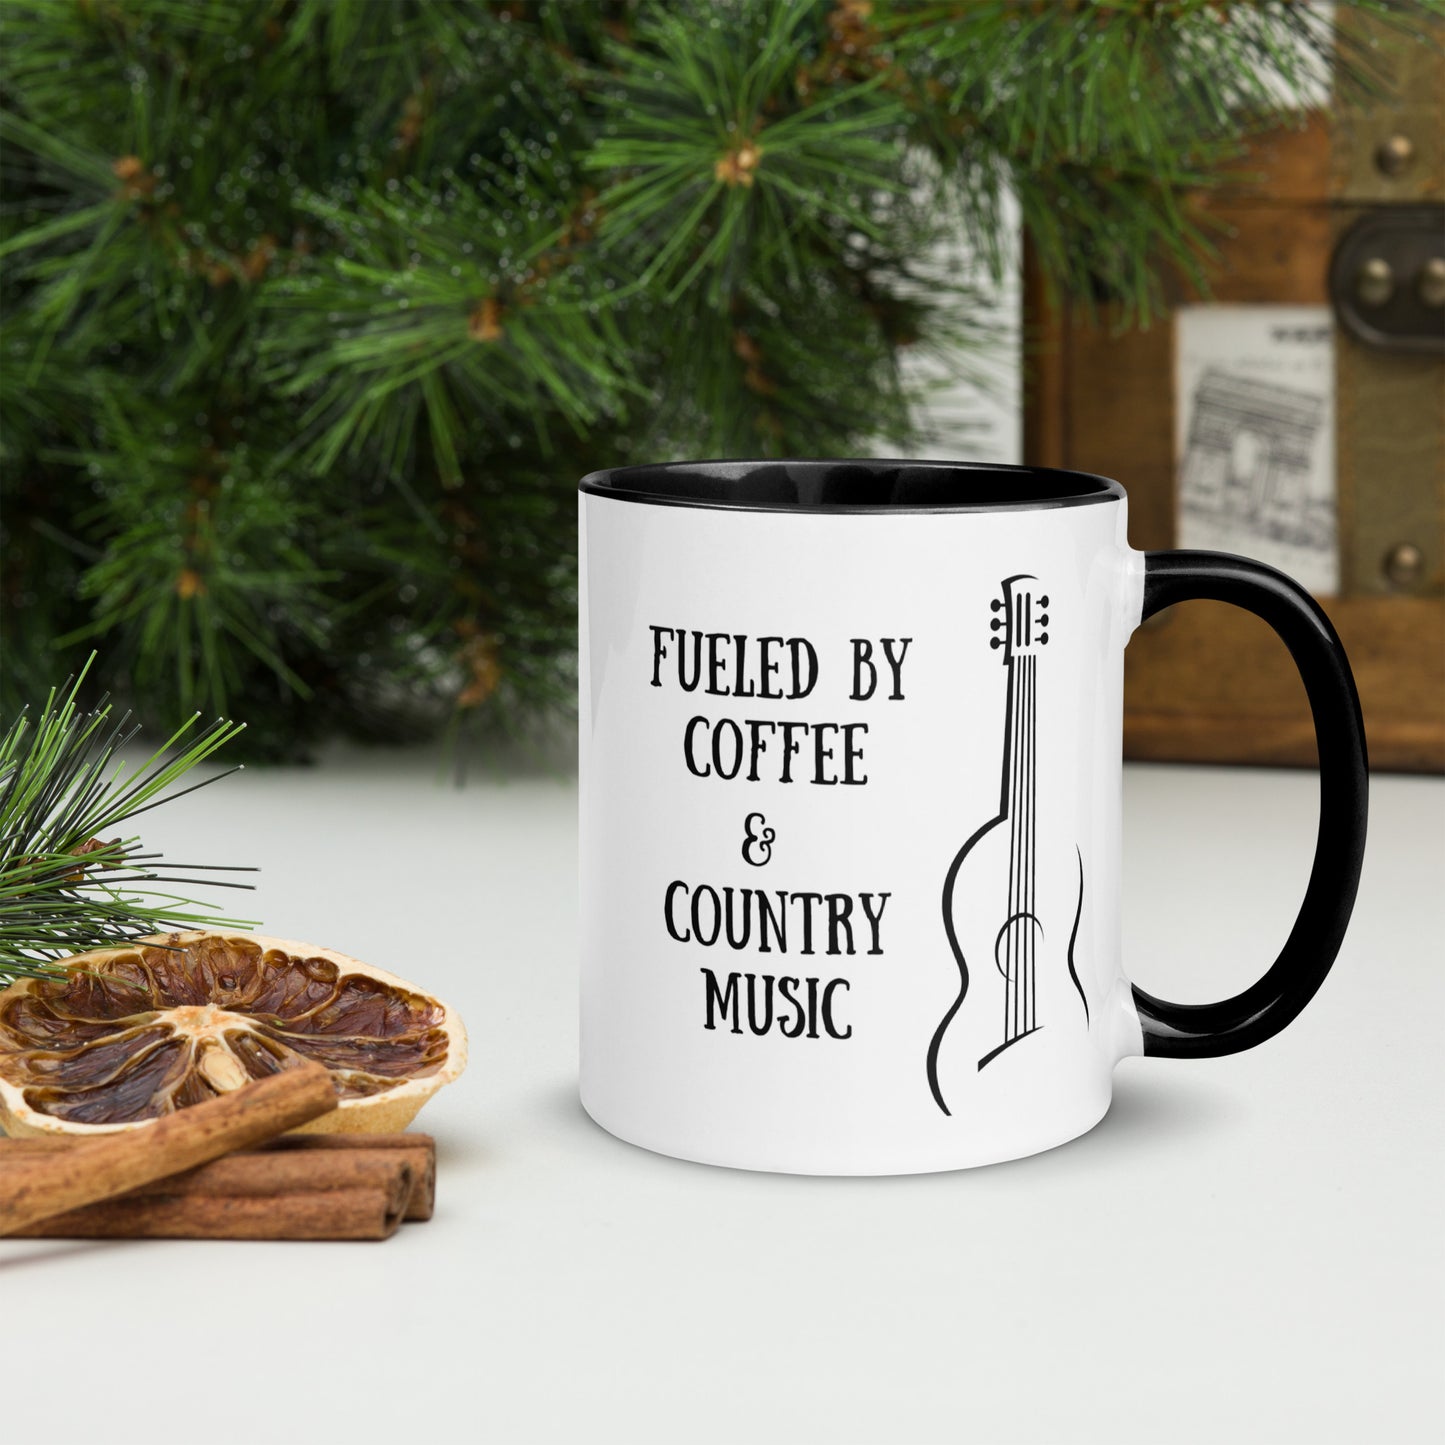 " Fueled by Coffee & Country Music" Mug